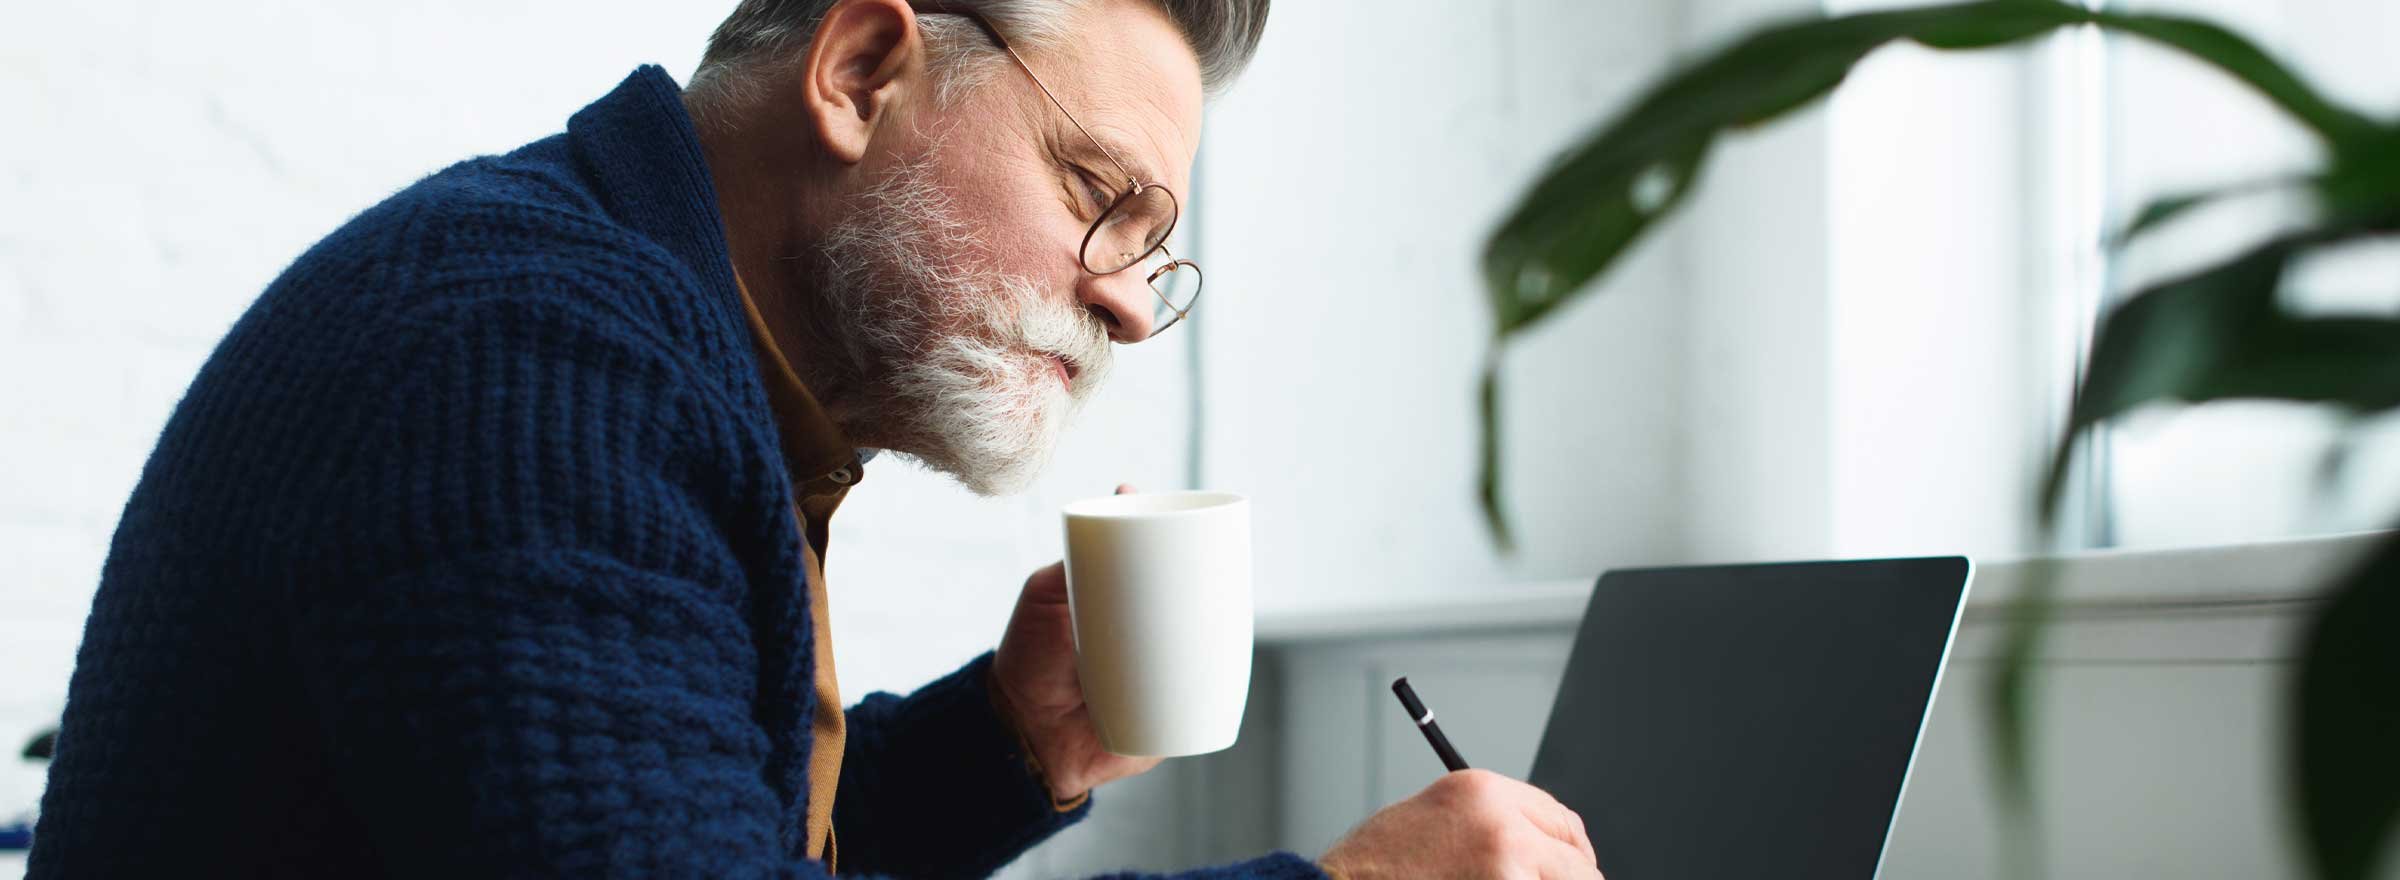 man with a mug, a laptop, and a pen